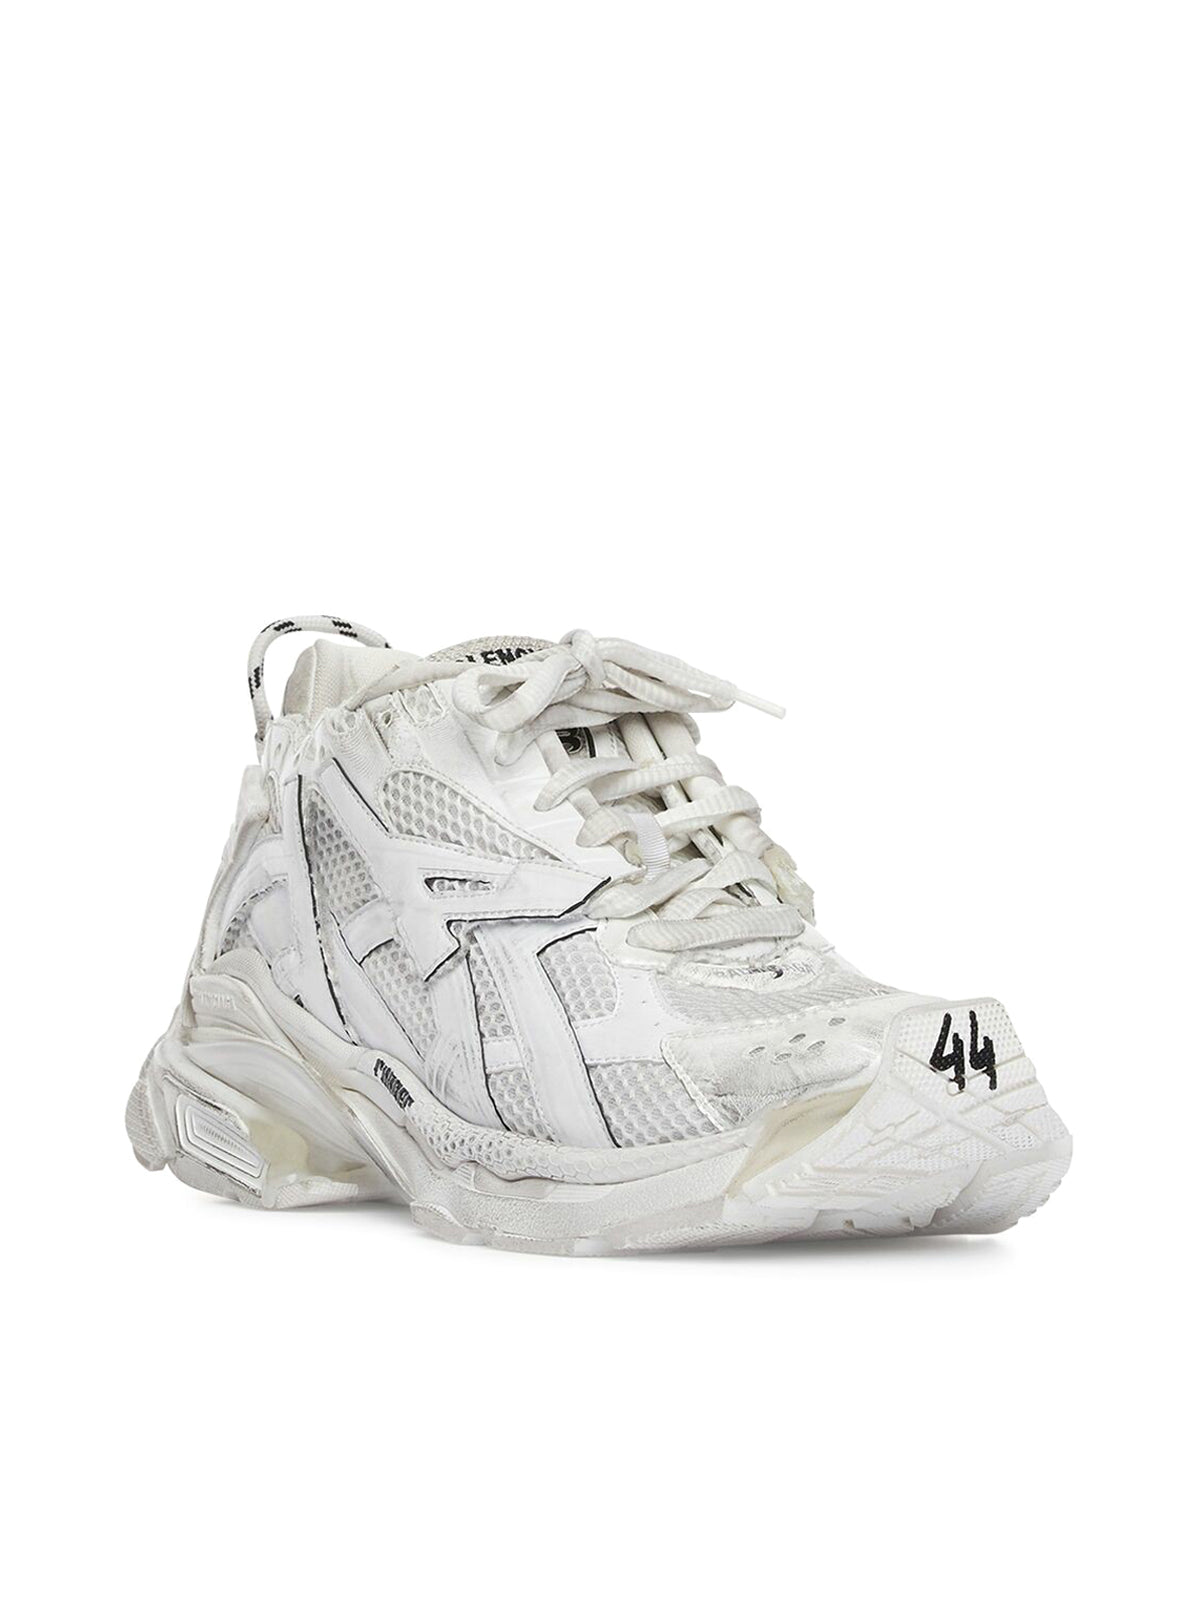 Runner sneakers in mesh and white nylon